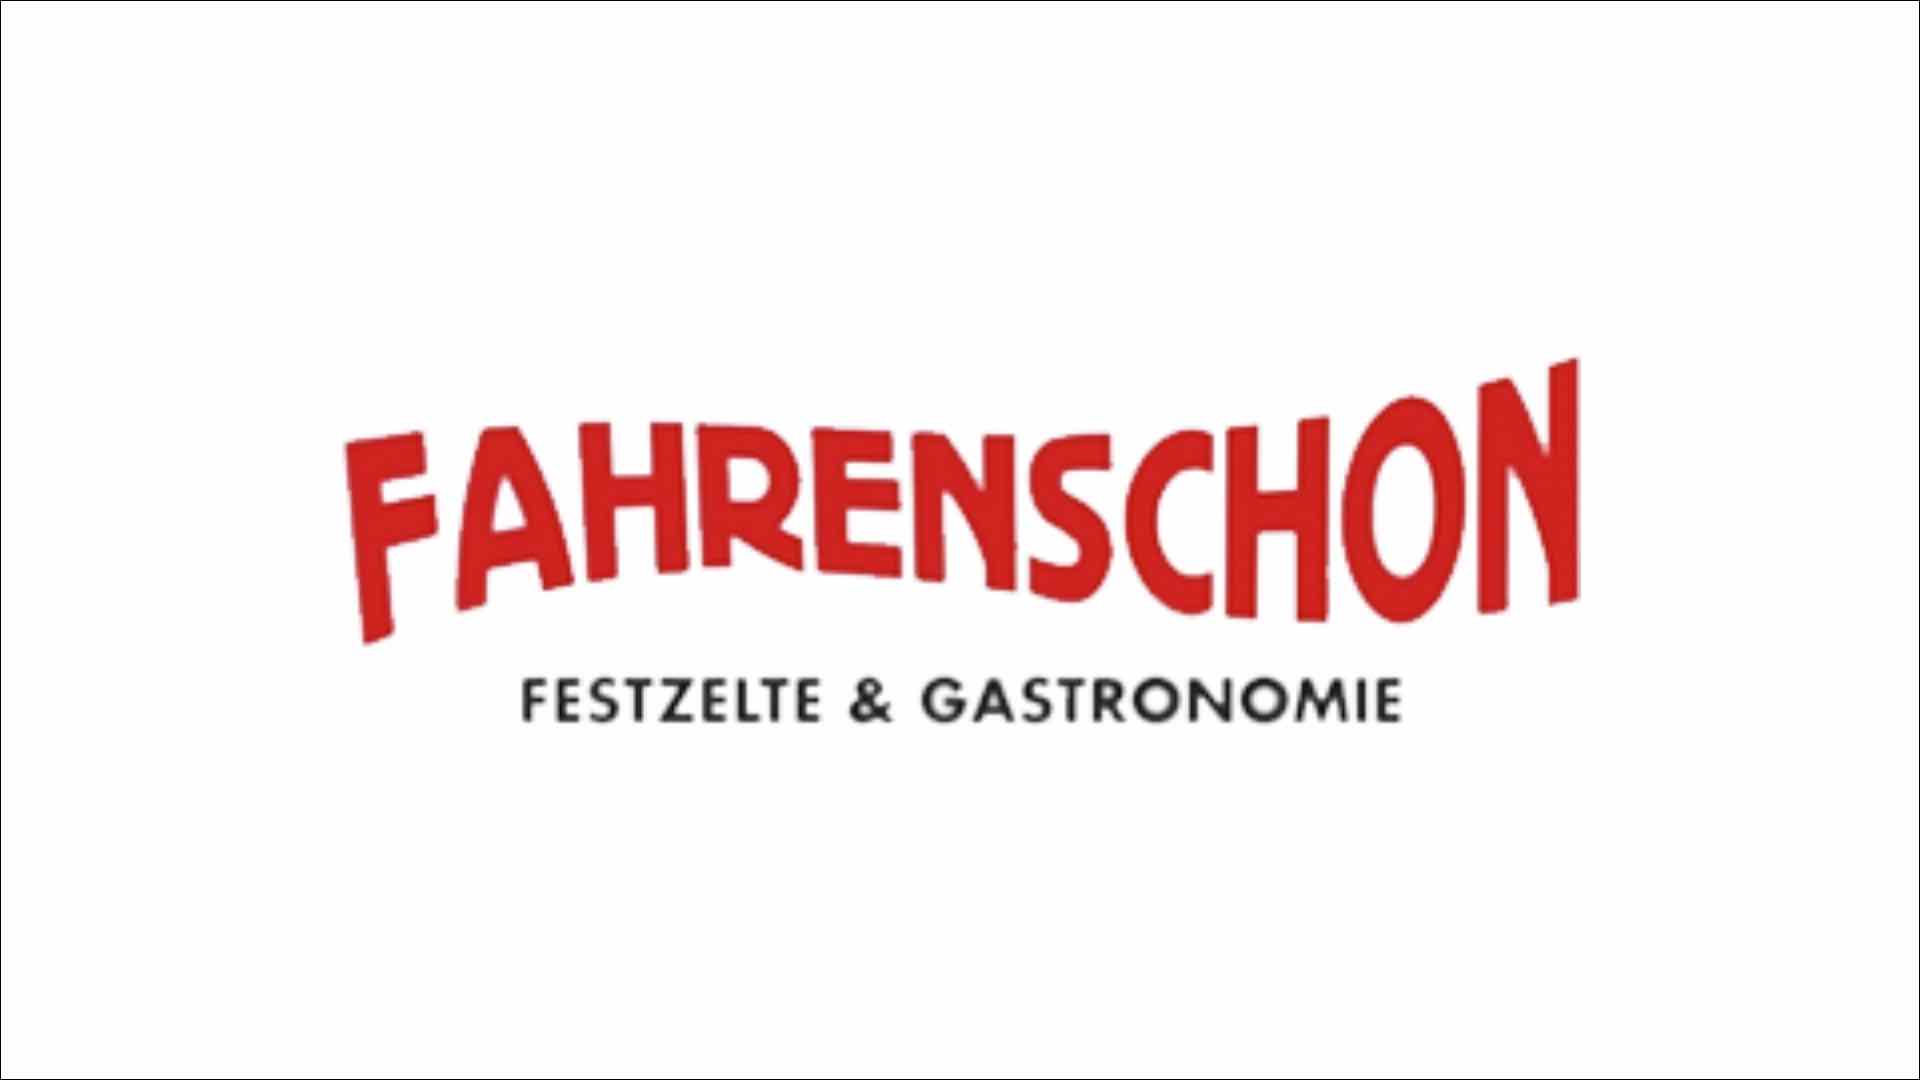 Fahrenschon Festzelte & Gastronomie